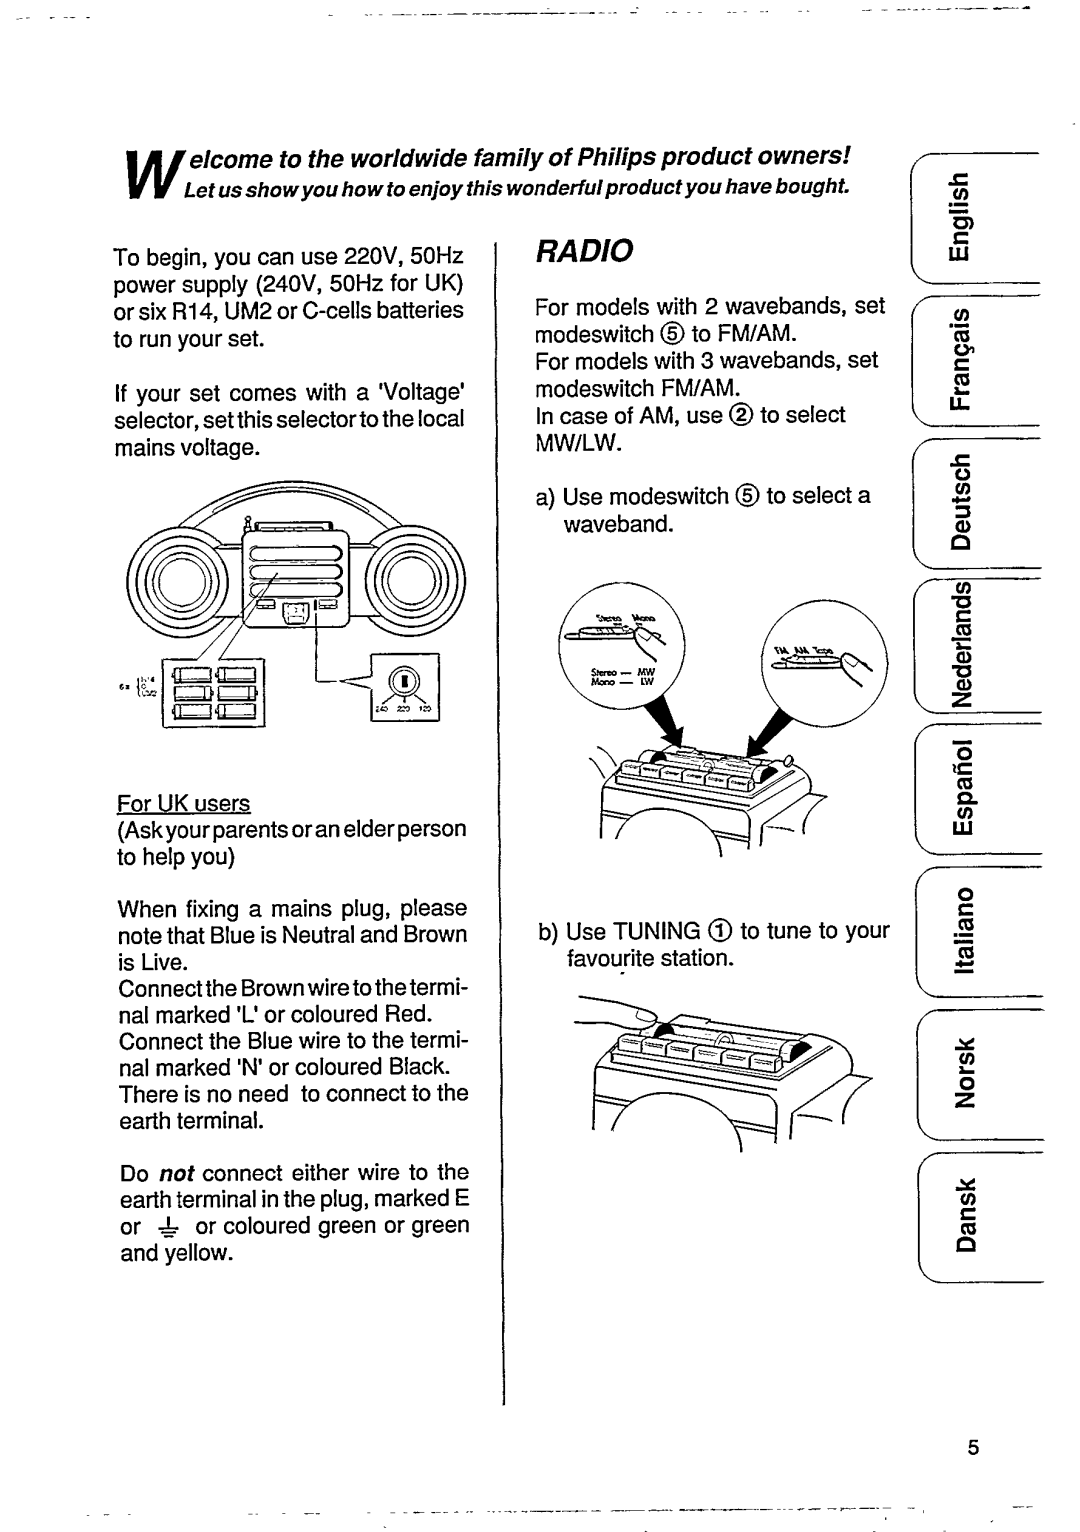 Philips Stereo Radio-Cassette Recorder manual 